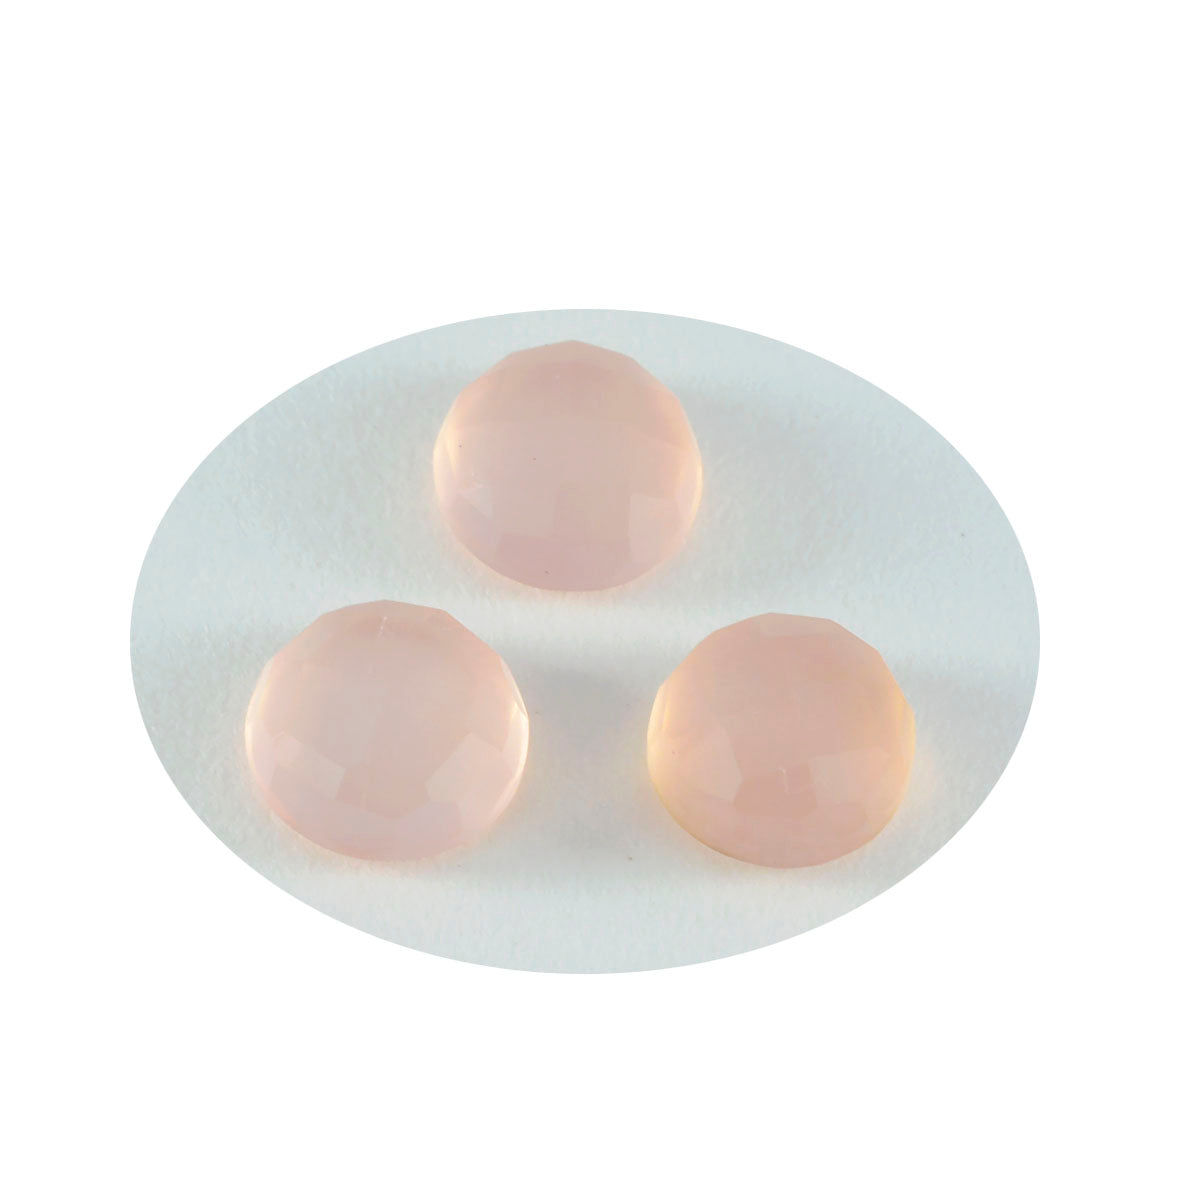 Riyogems 1PC Pink Rose Quartz Faceted 15x15 mm Round Shape excellent Quality Loose Gems